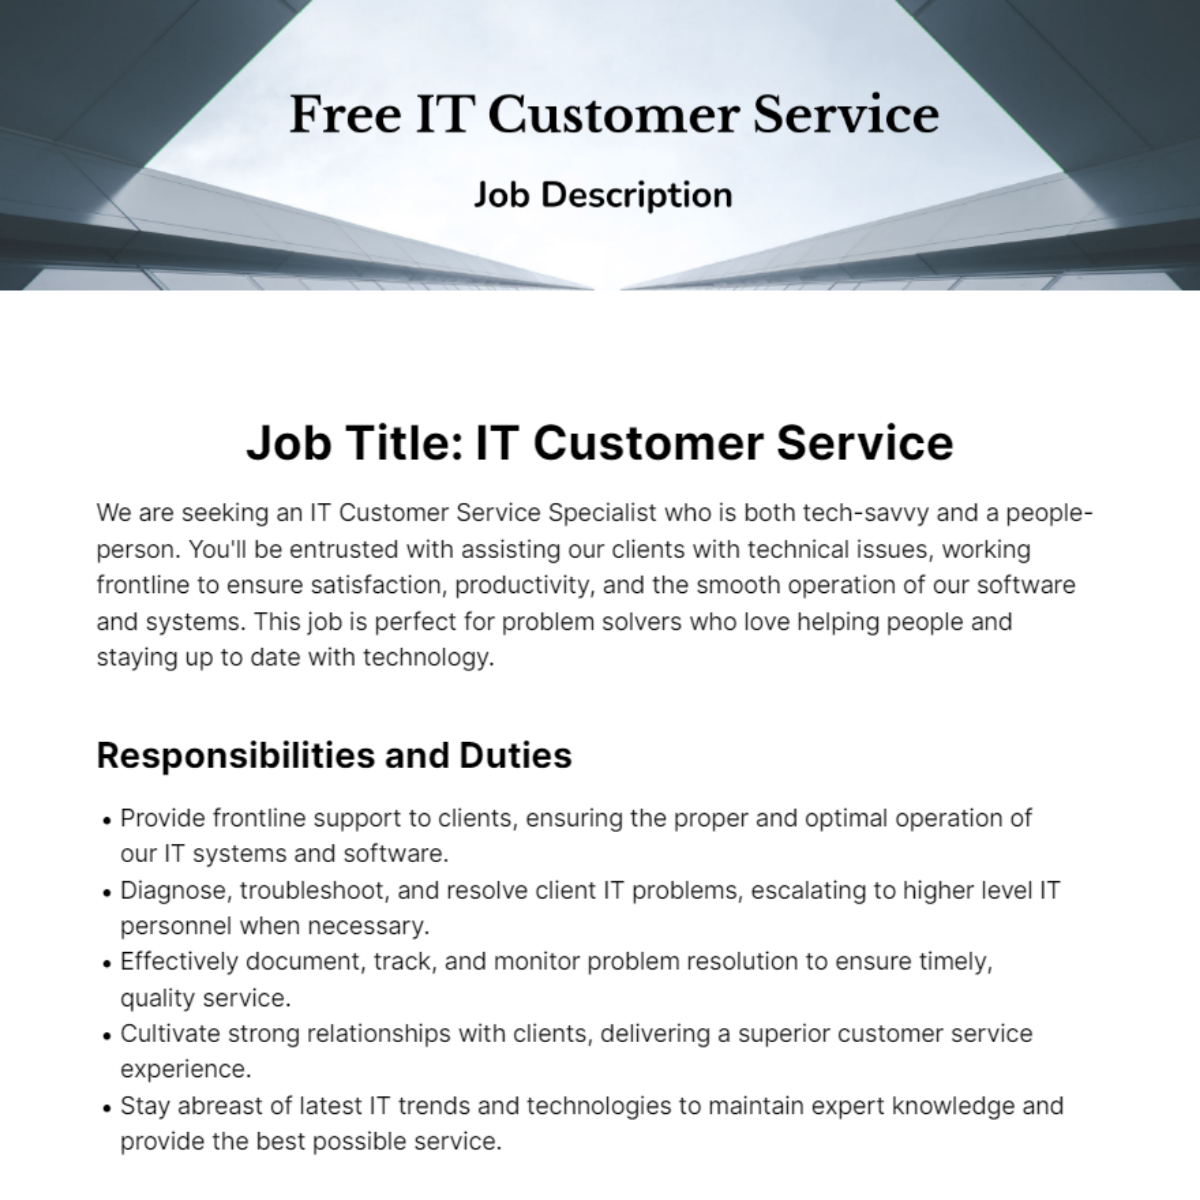 Free IT Customer Service Job Description Template